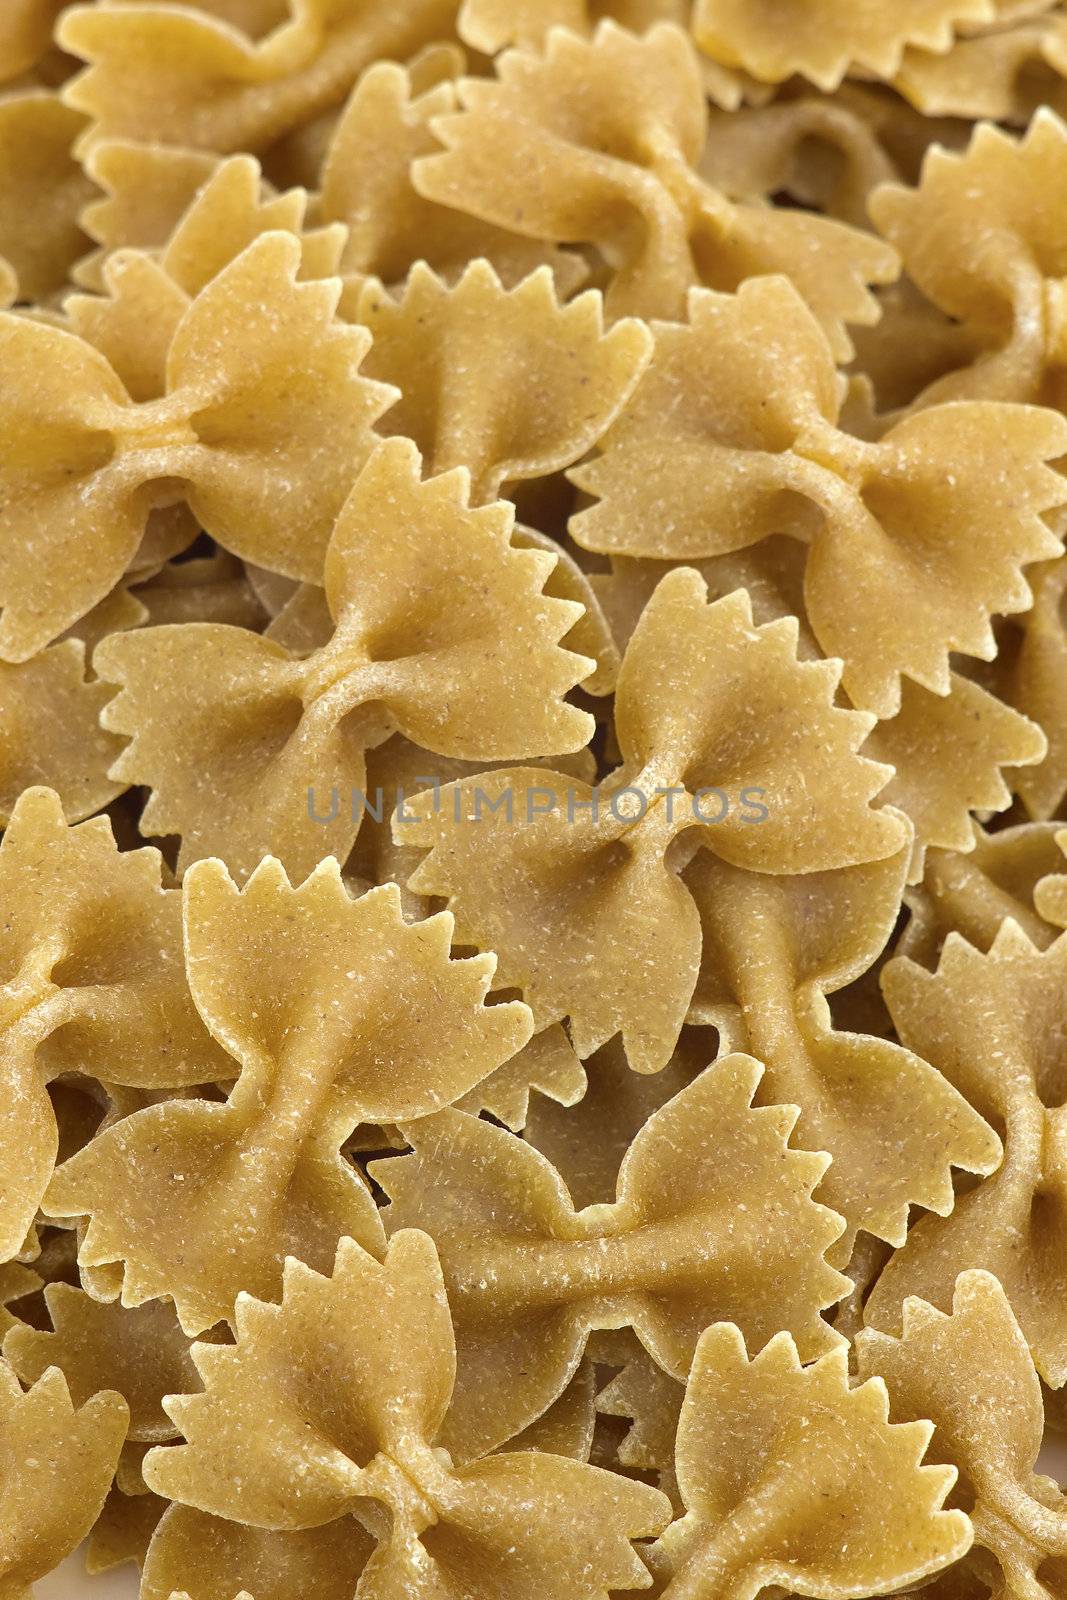 whole grain farfalle pasta close up by miradrozdowski